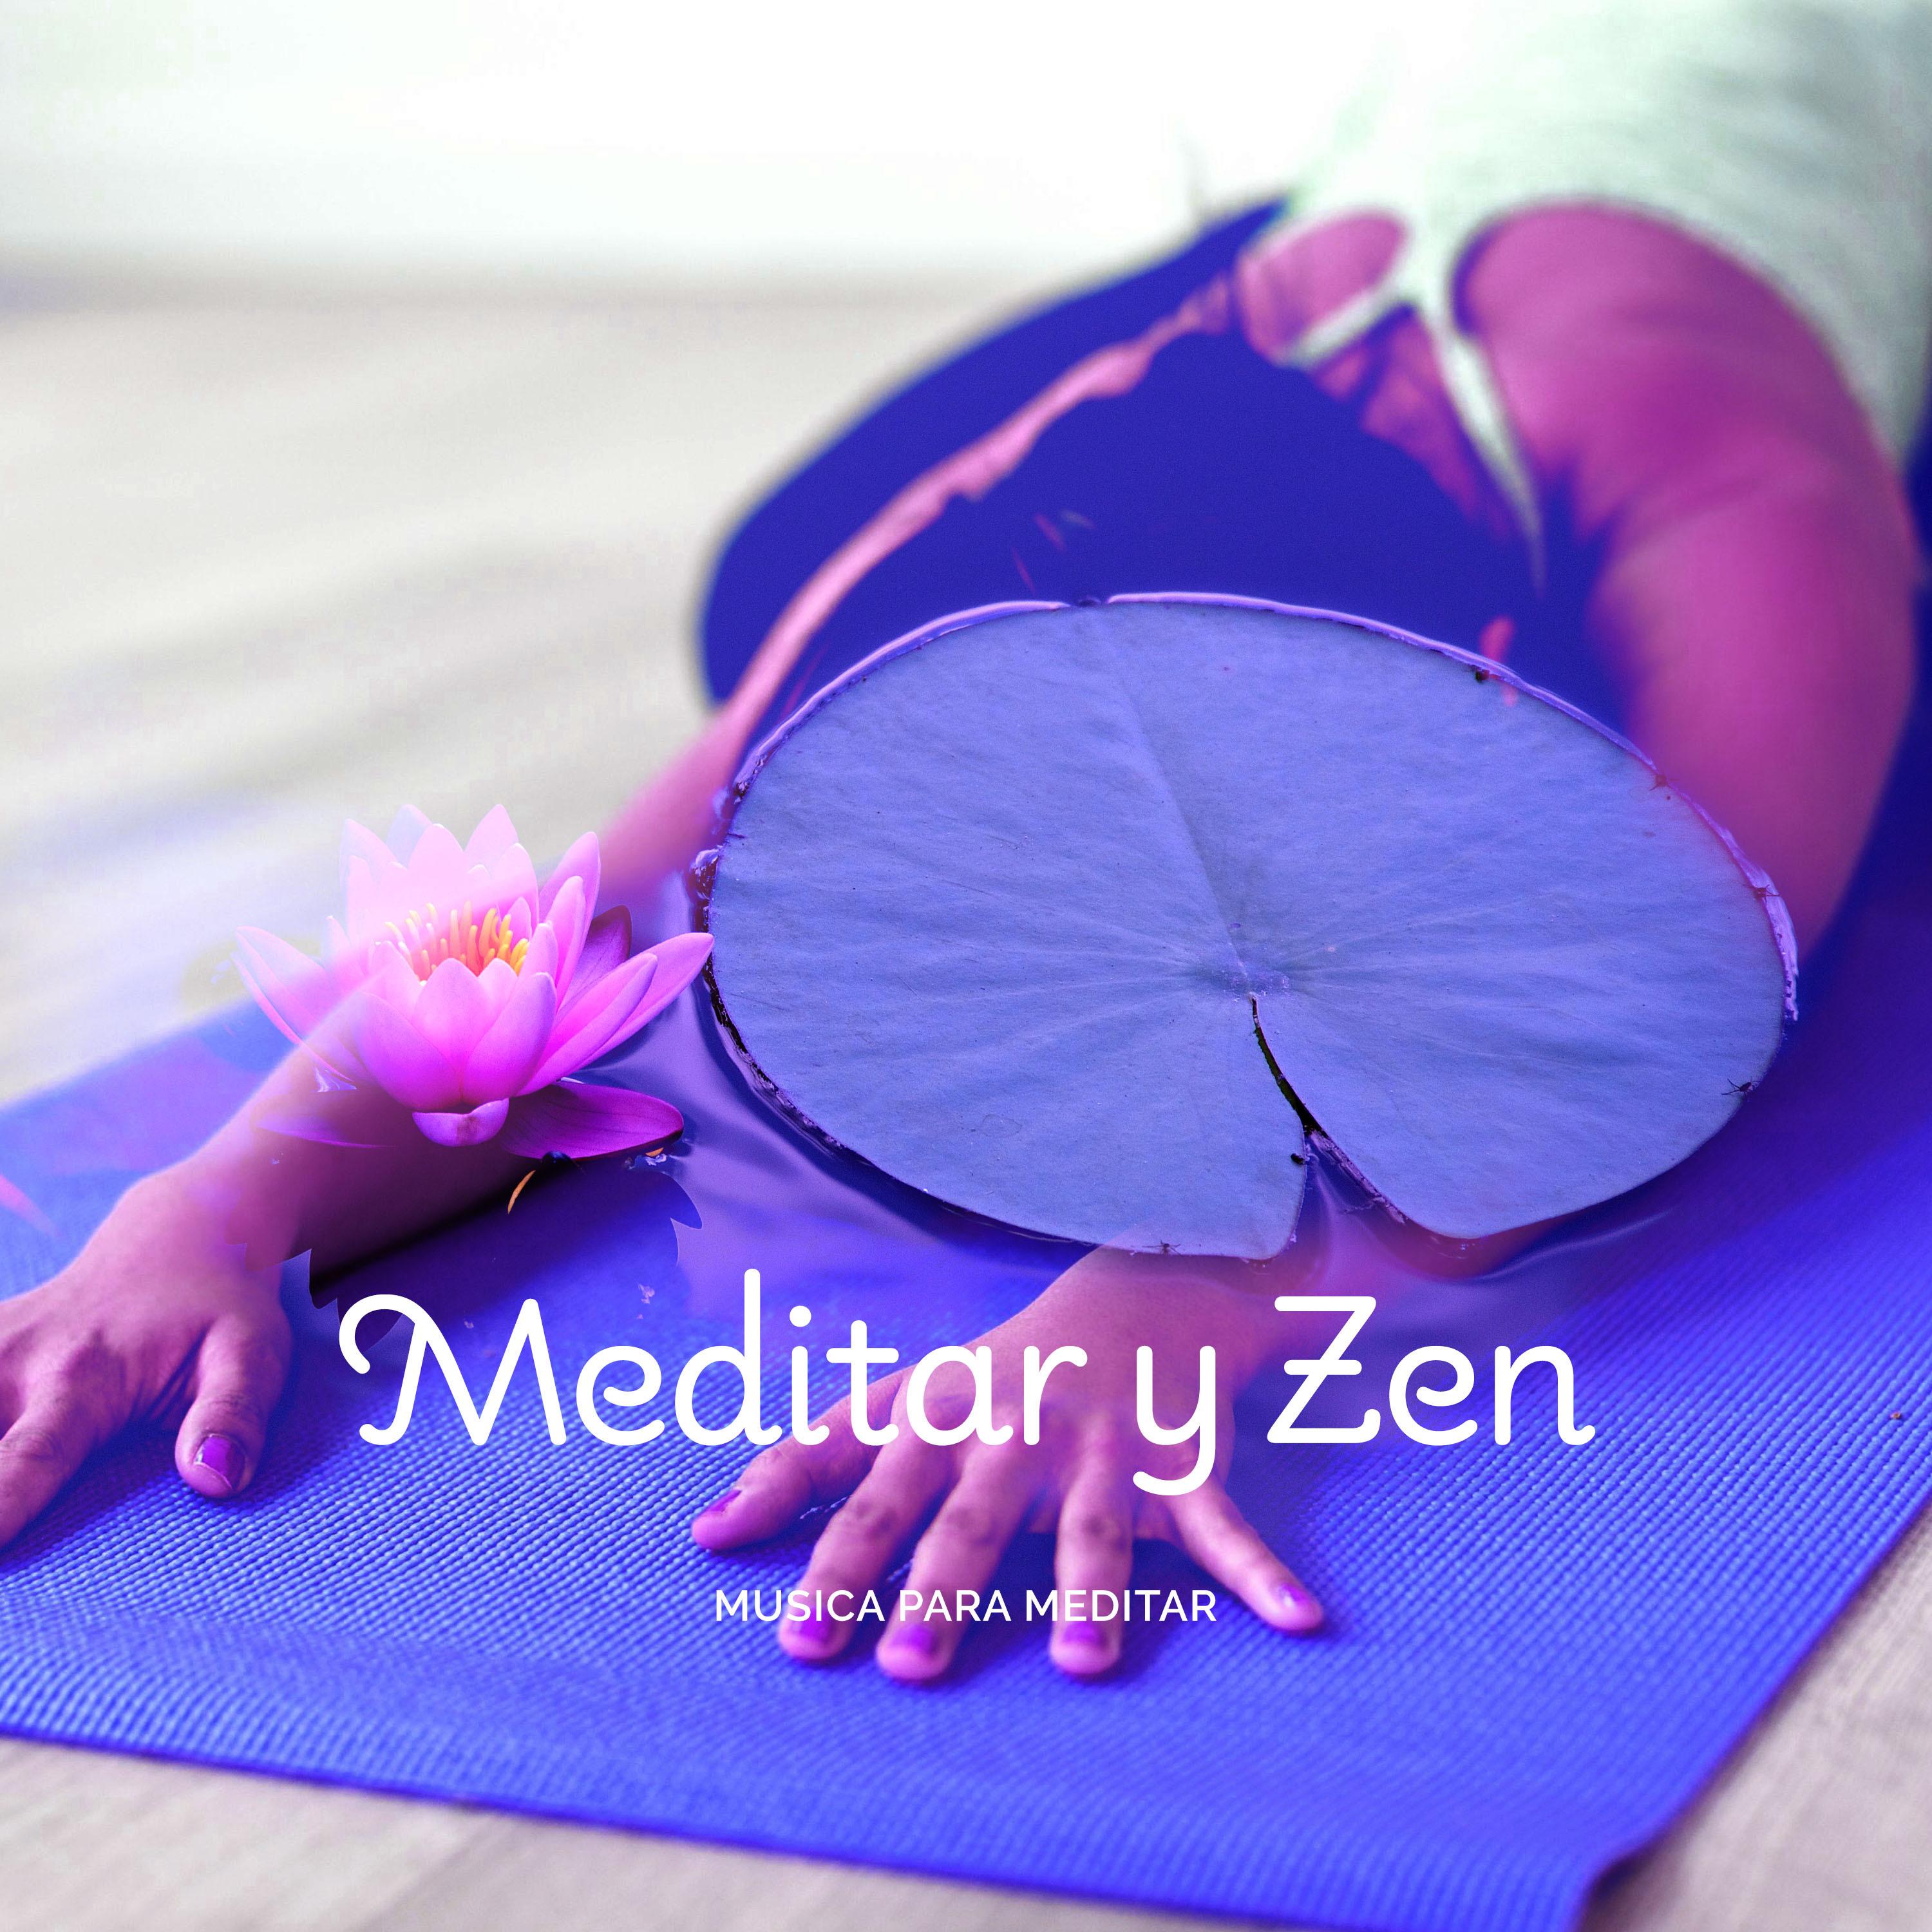 Meditar y zen